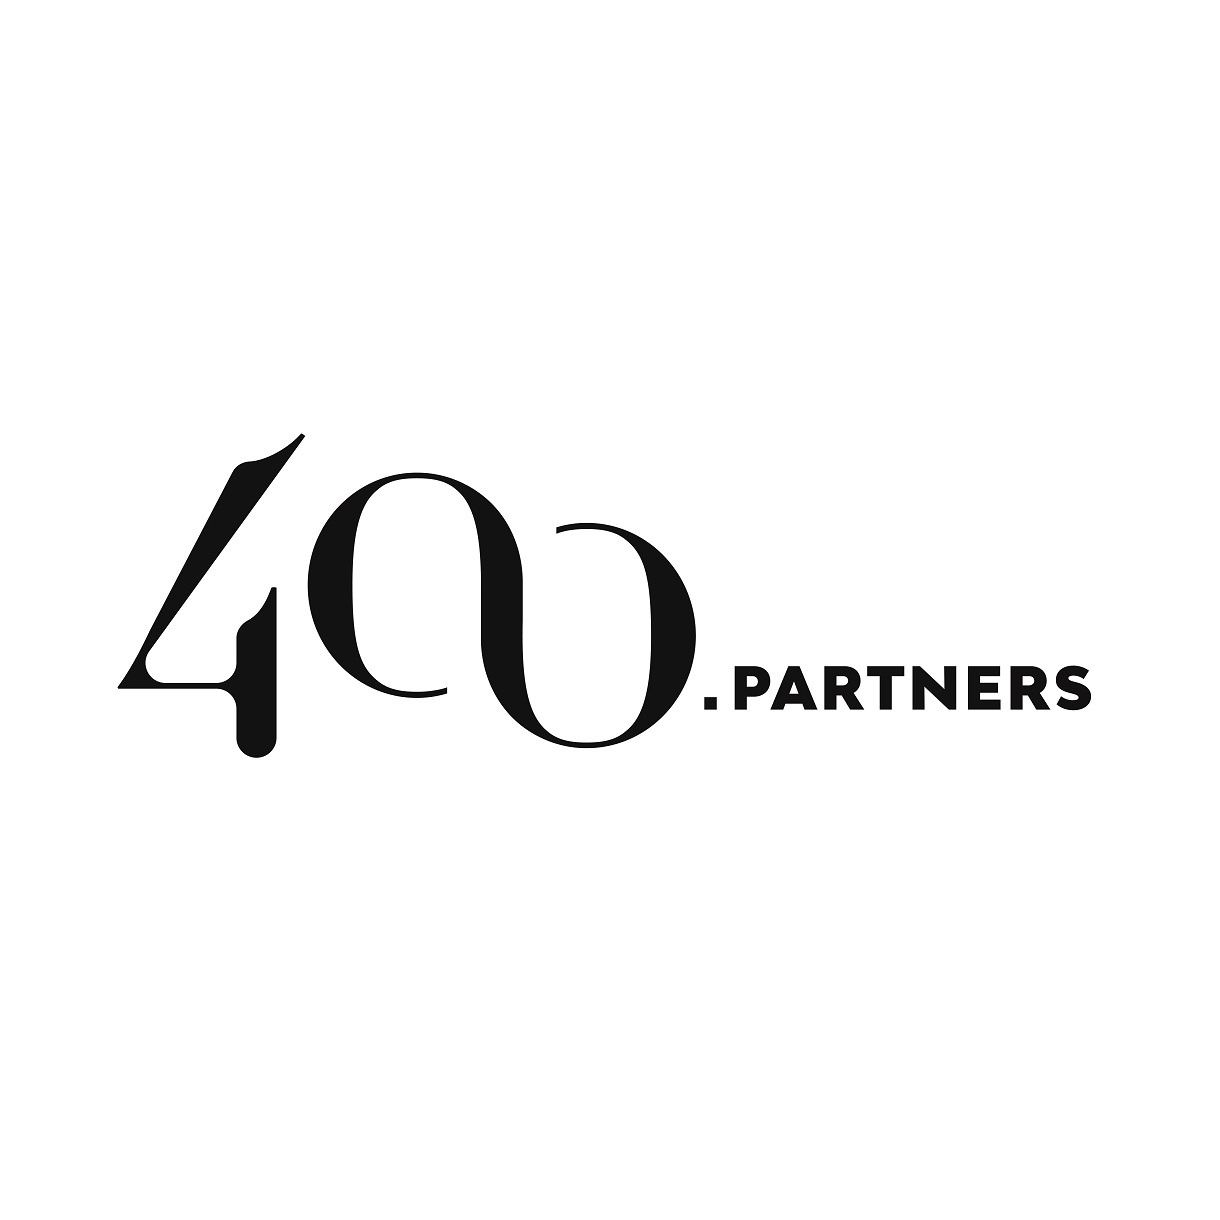 the 400 Partners logo.